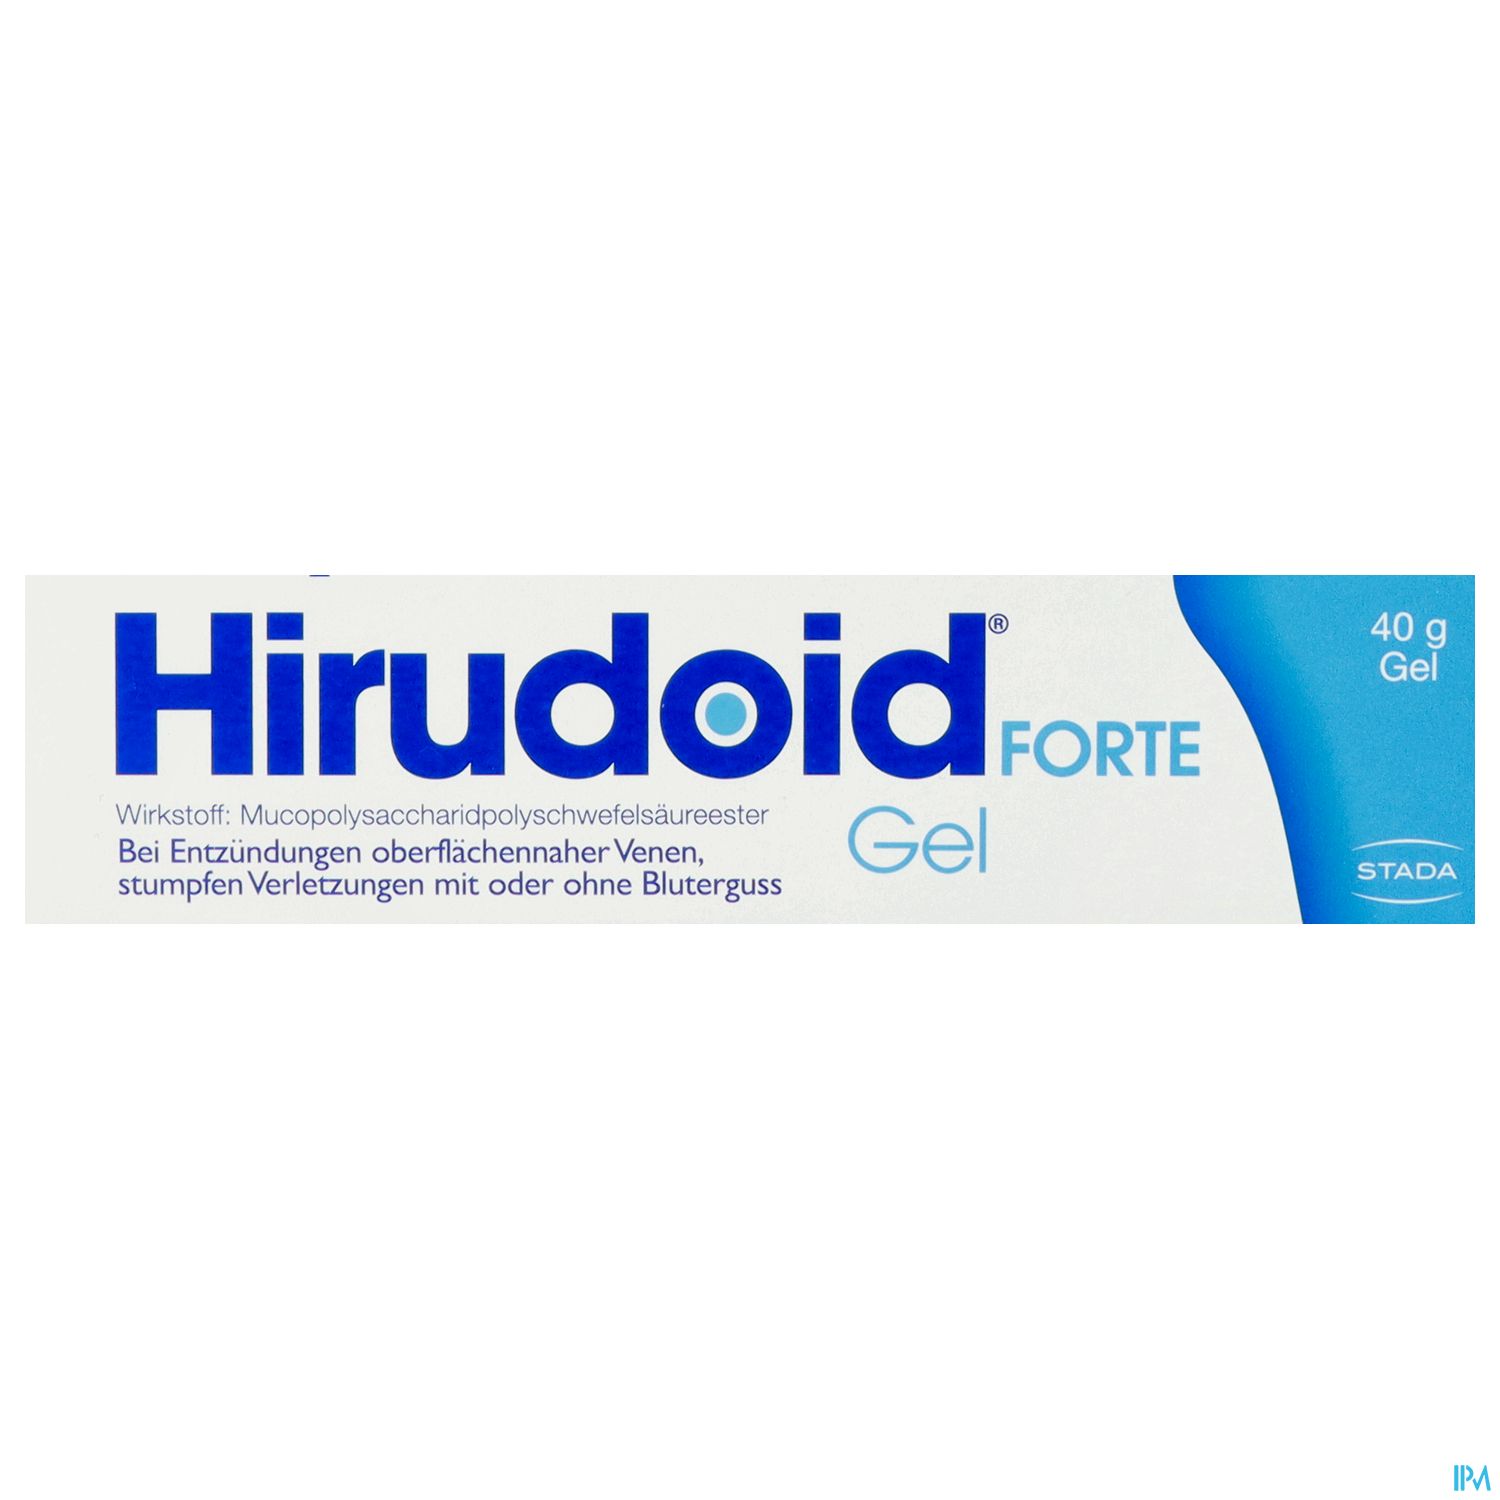 Hirudoid forte - Gel